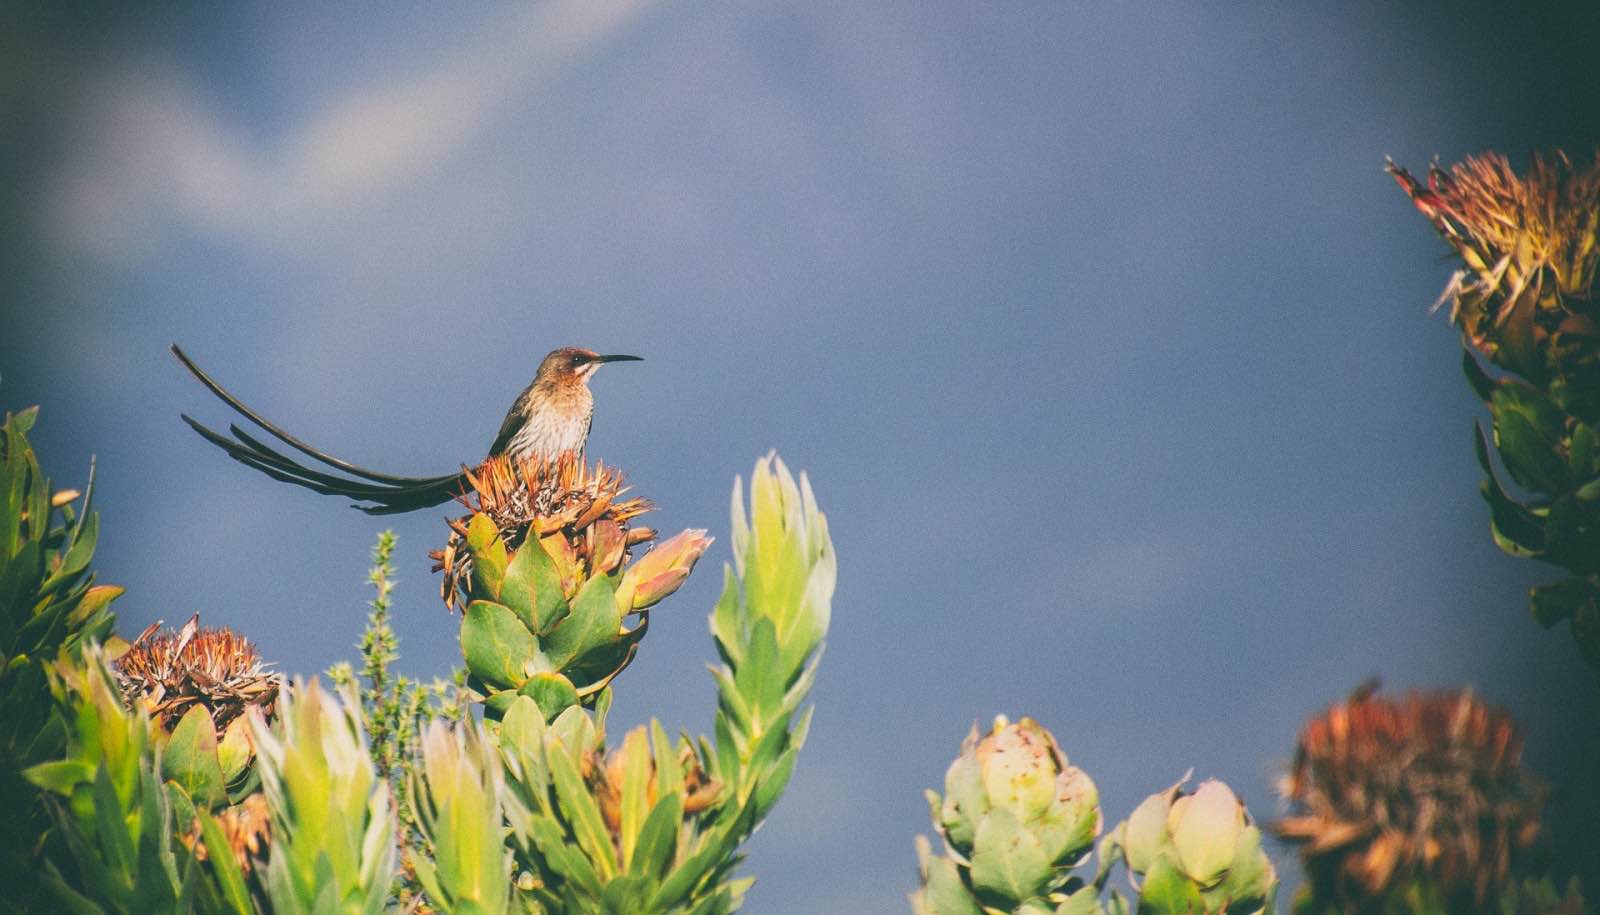 Cape sugar bird in the fynbos vegetation